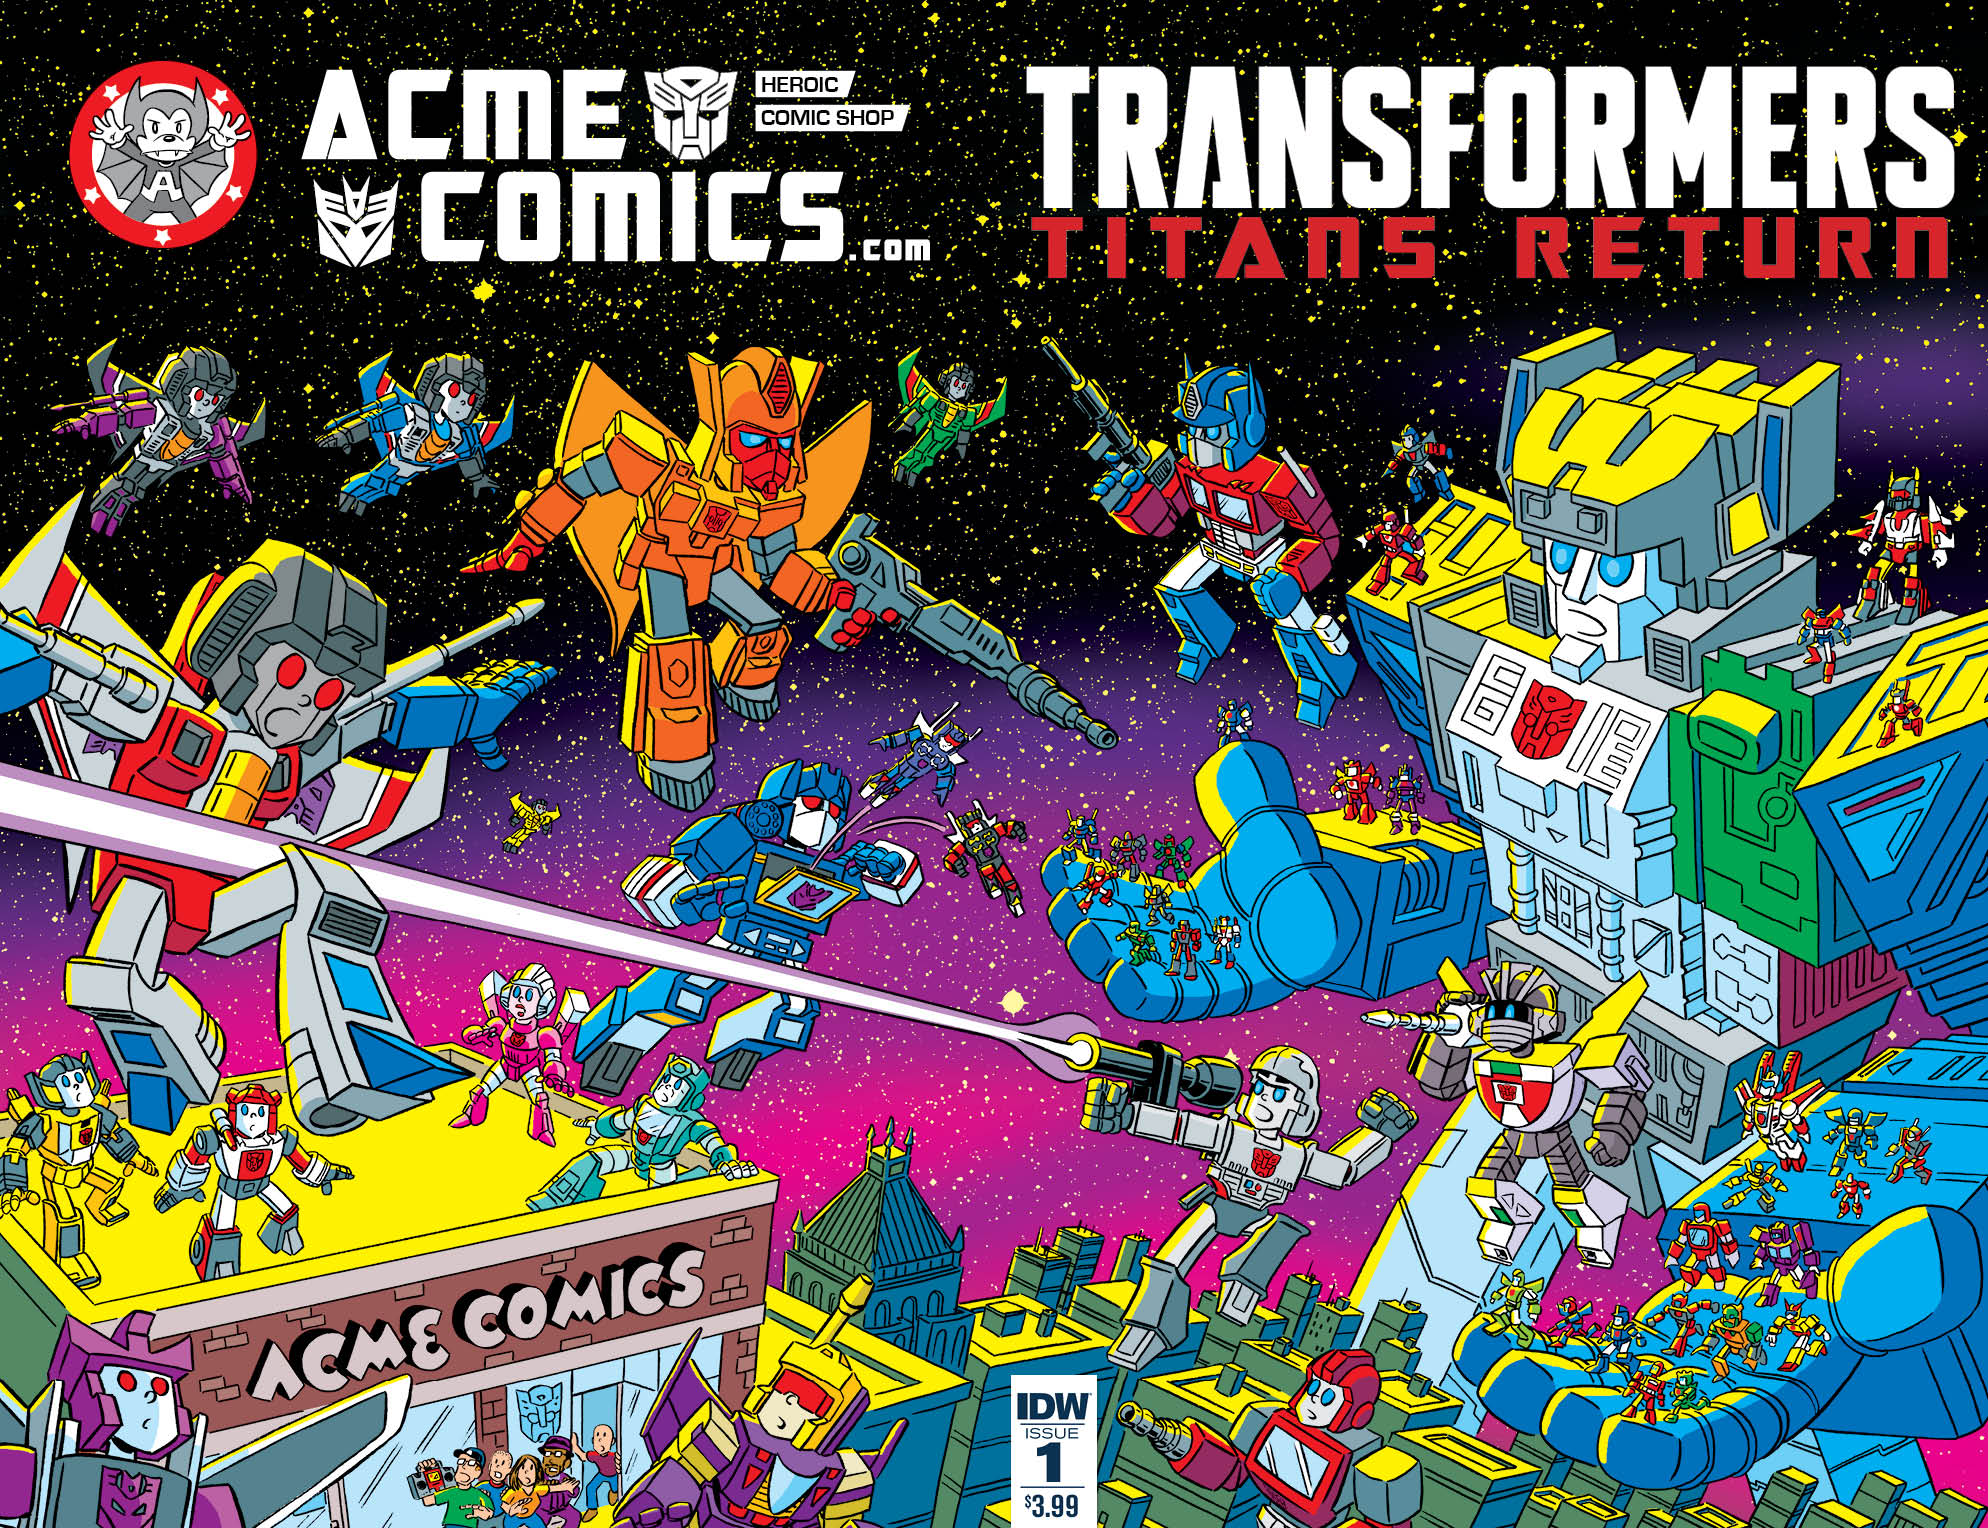 Transformers Titans Returns TFcon Chicago/Acme Comics Exclusive Cover Variant